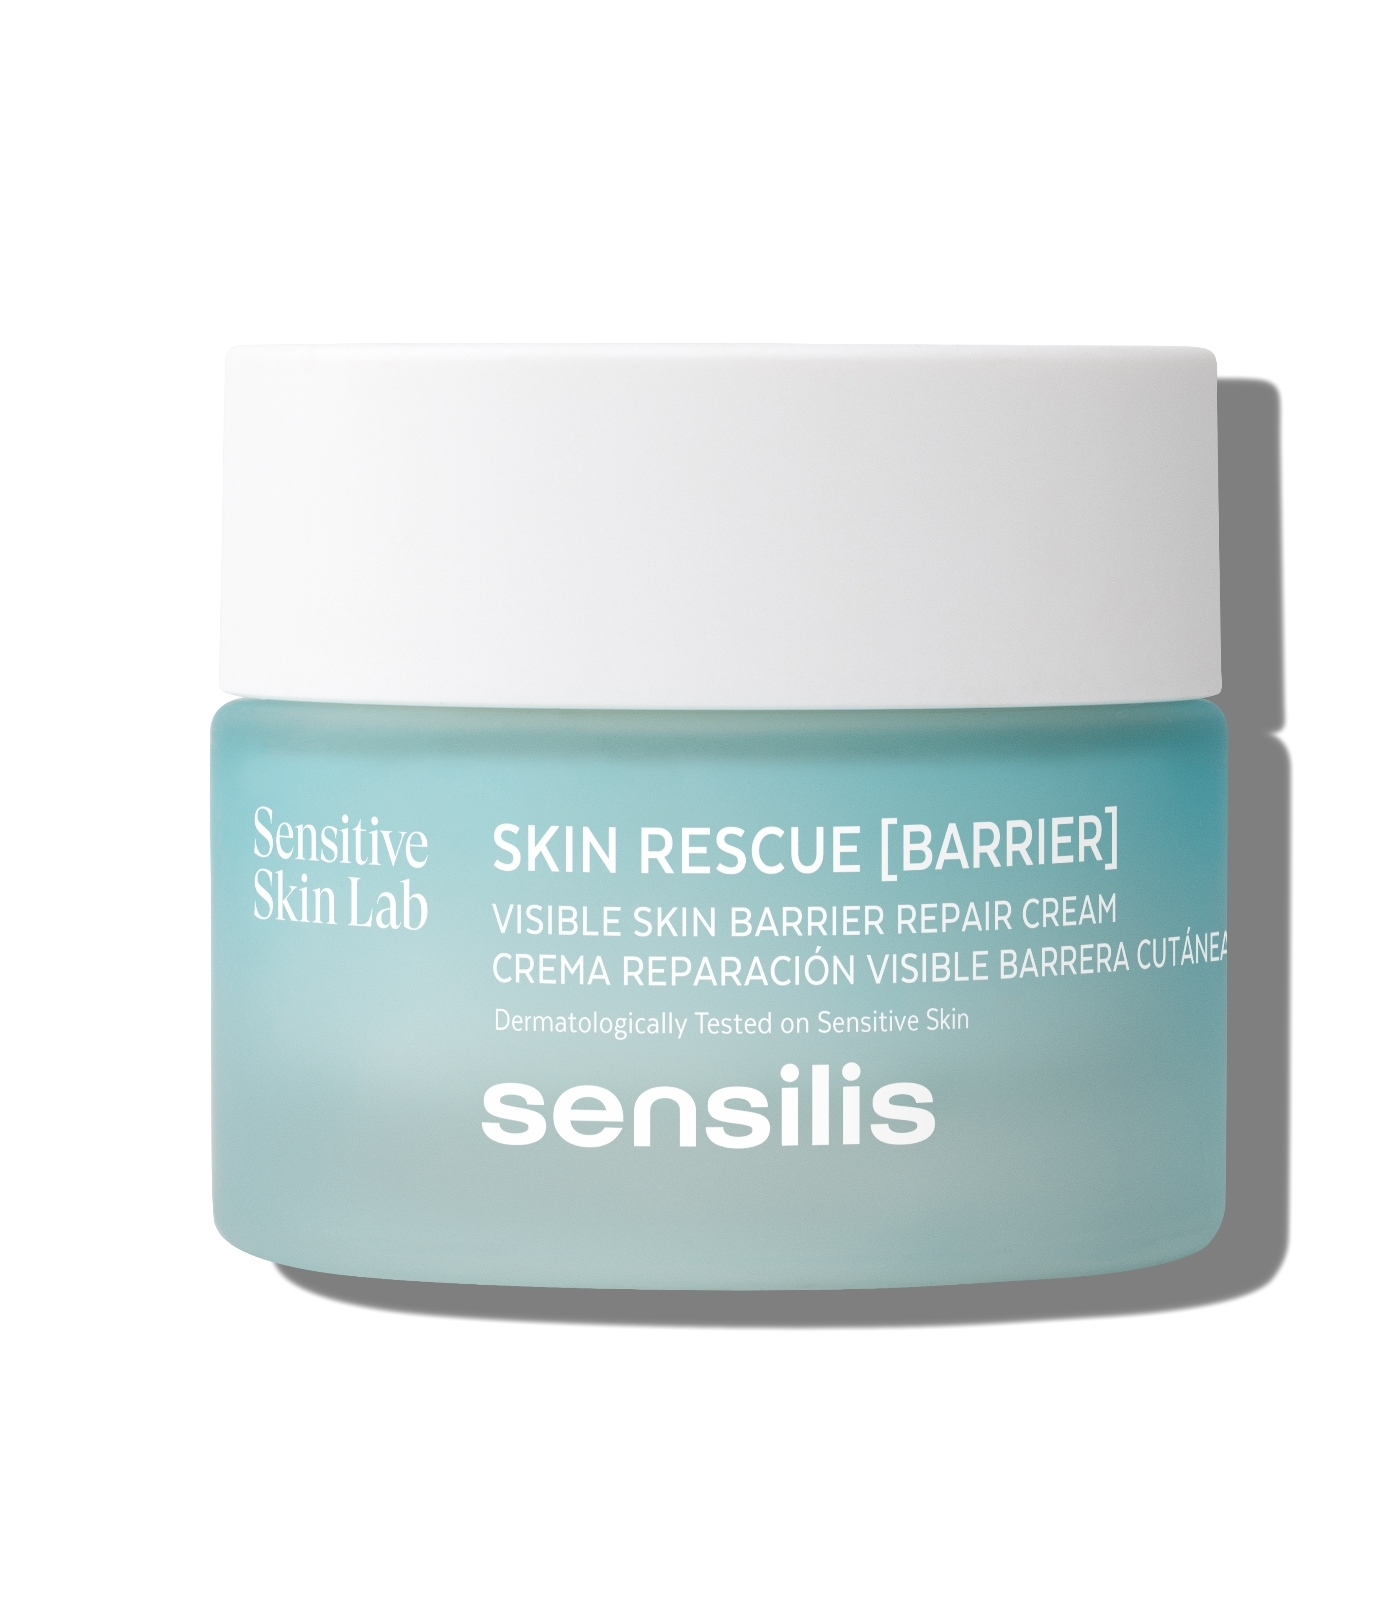 Crema Skin Rescue [Barrier] de Sensilis.